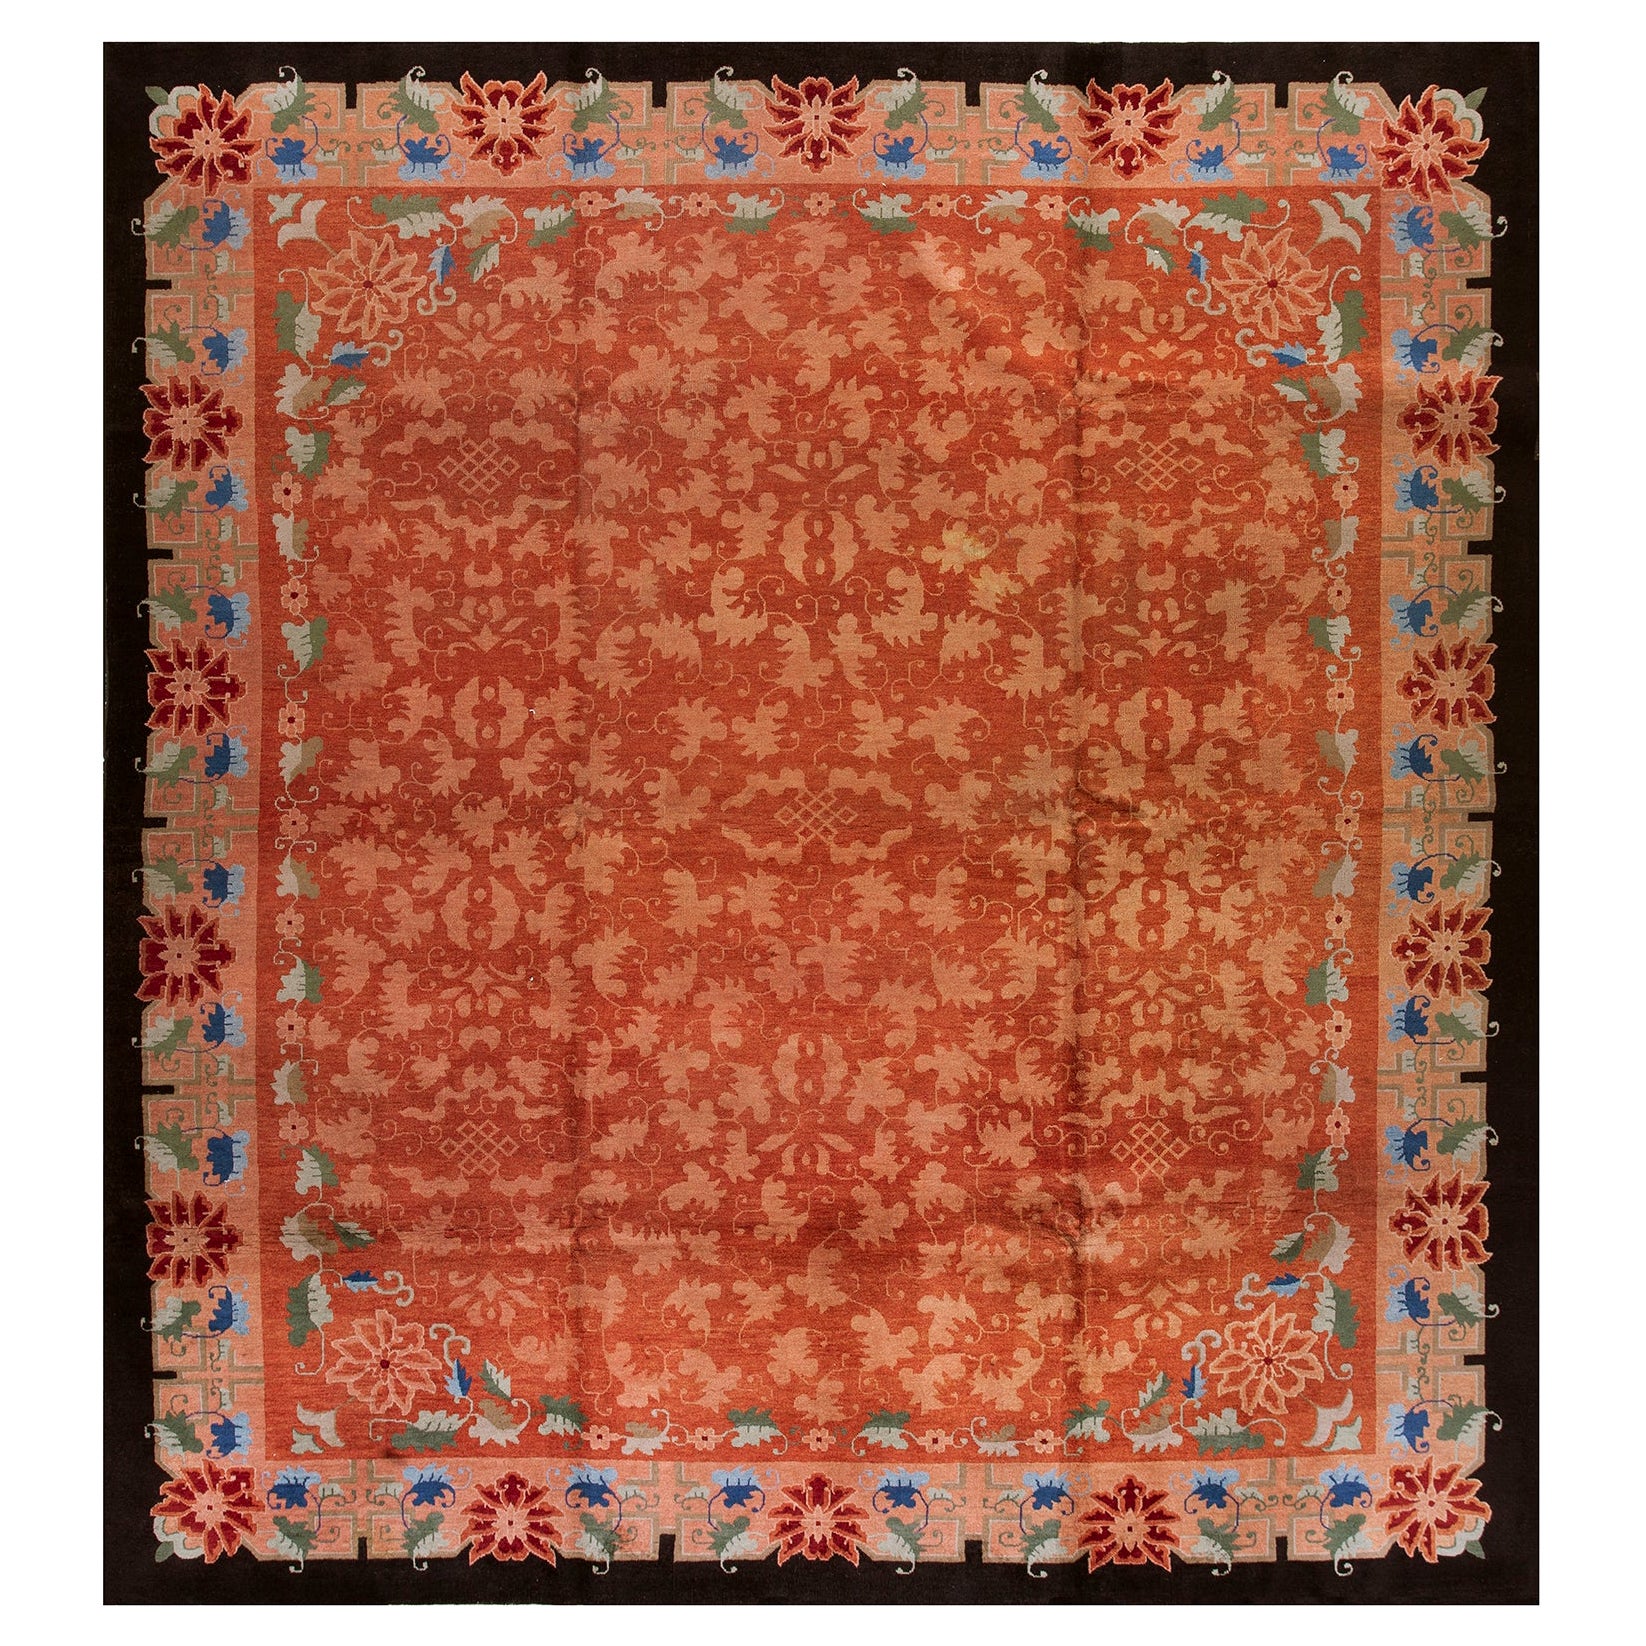 1920s Chinese Art Deco Carpet ( 10' 6" x 11' 8" - 320 x 355 cm ) For Sale